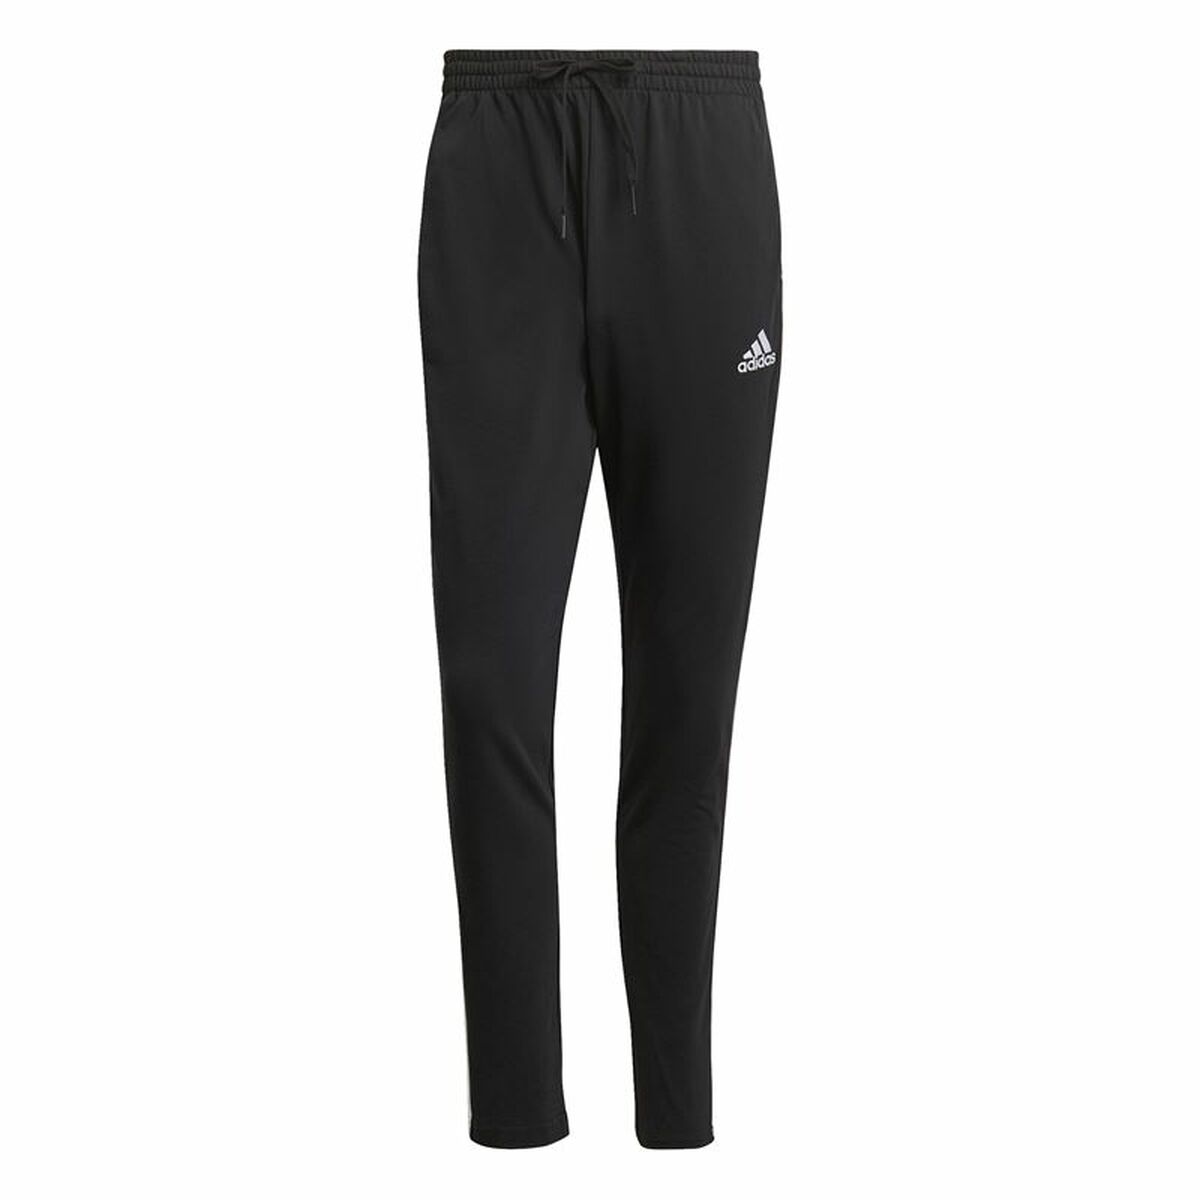 Pantaloni pentru Adulți Adidas Essentials 3 Stripes Negru - Mărime S